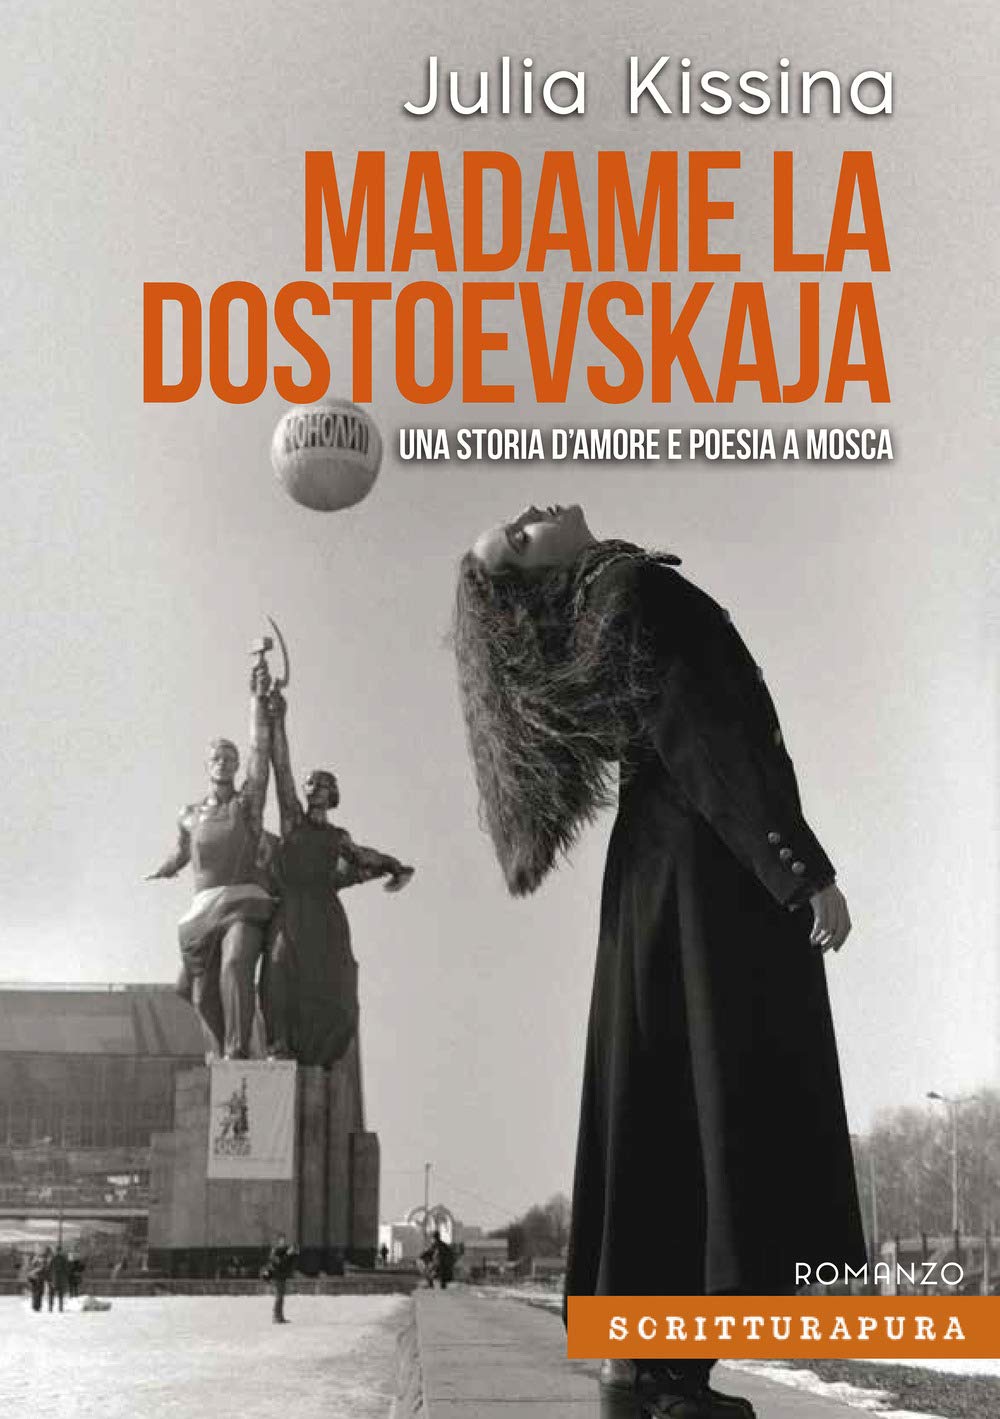 Julia Kissina – Madame la Dostoevskaja (Scritturapura, Asti 2020)